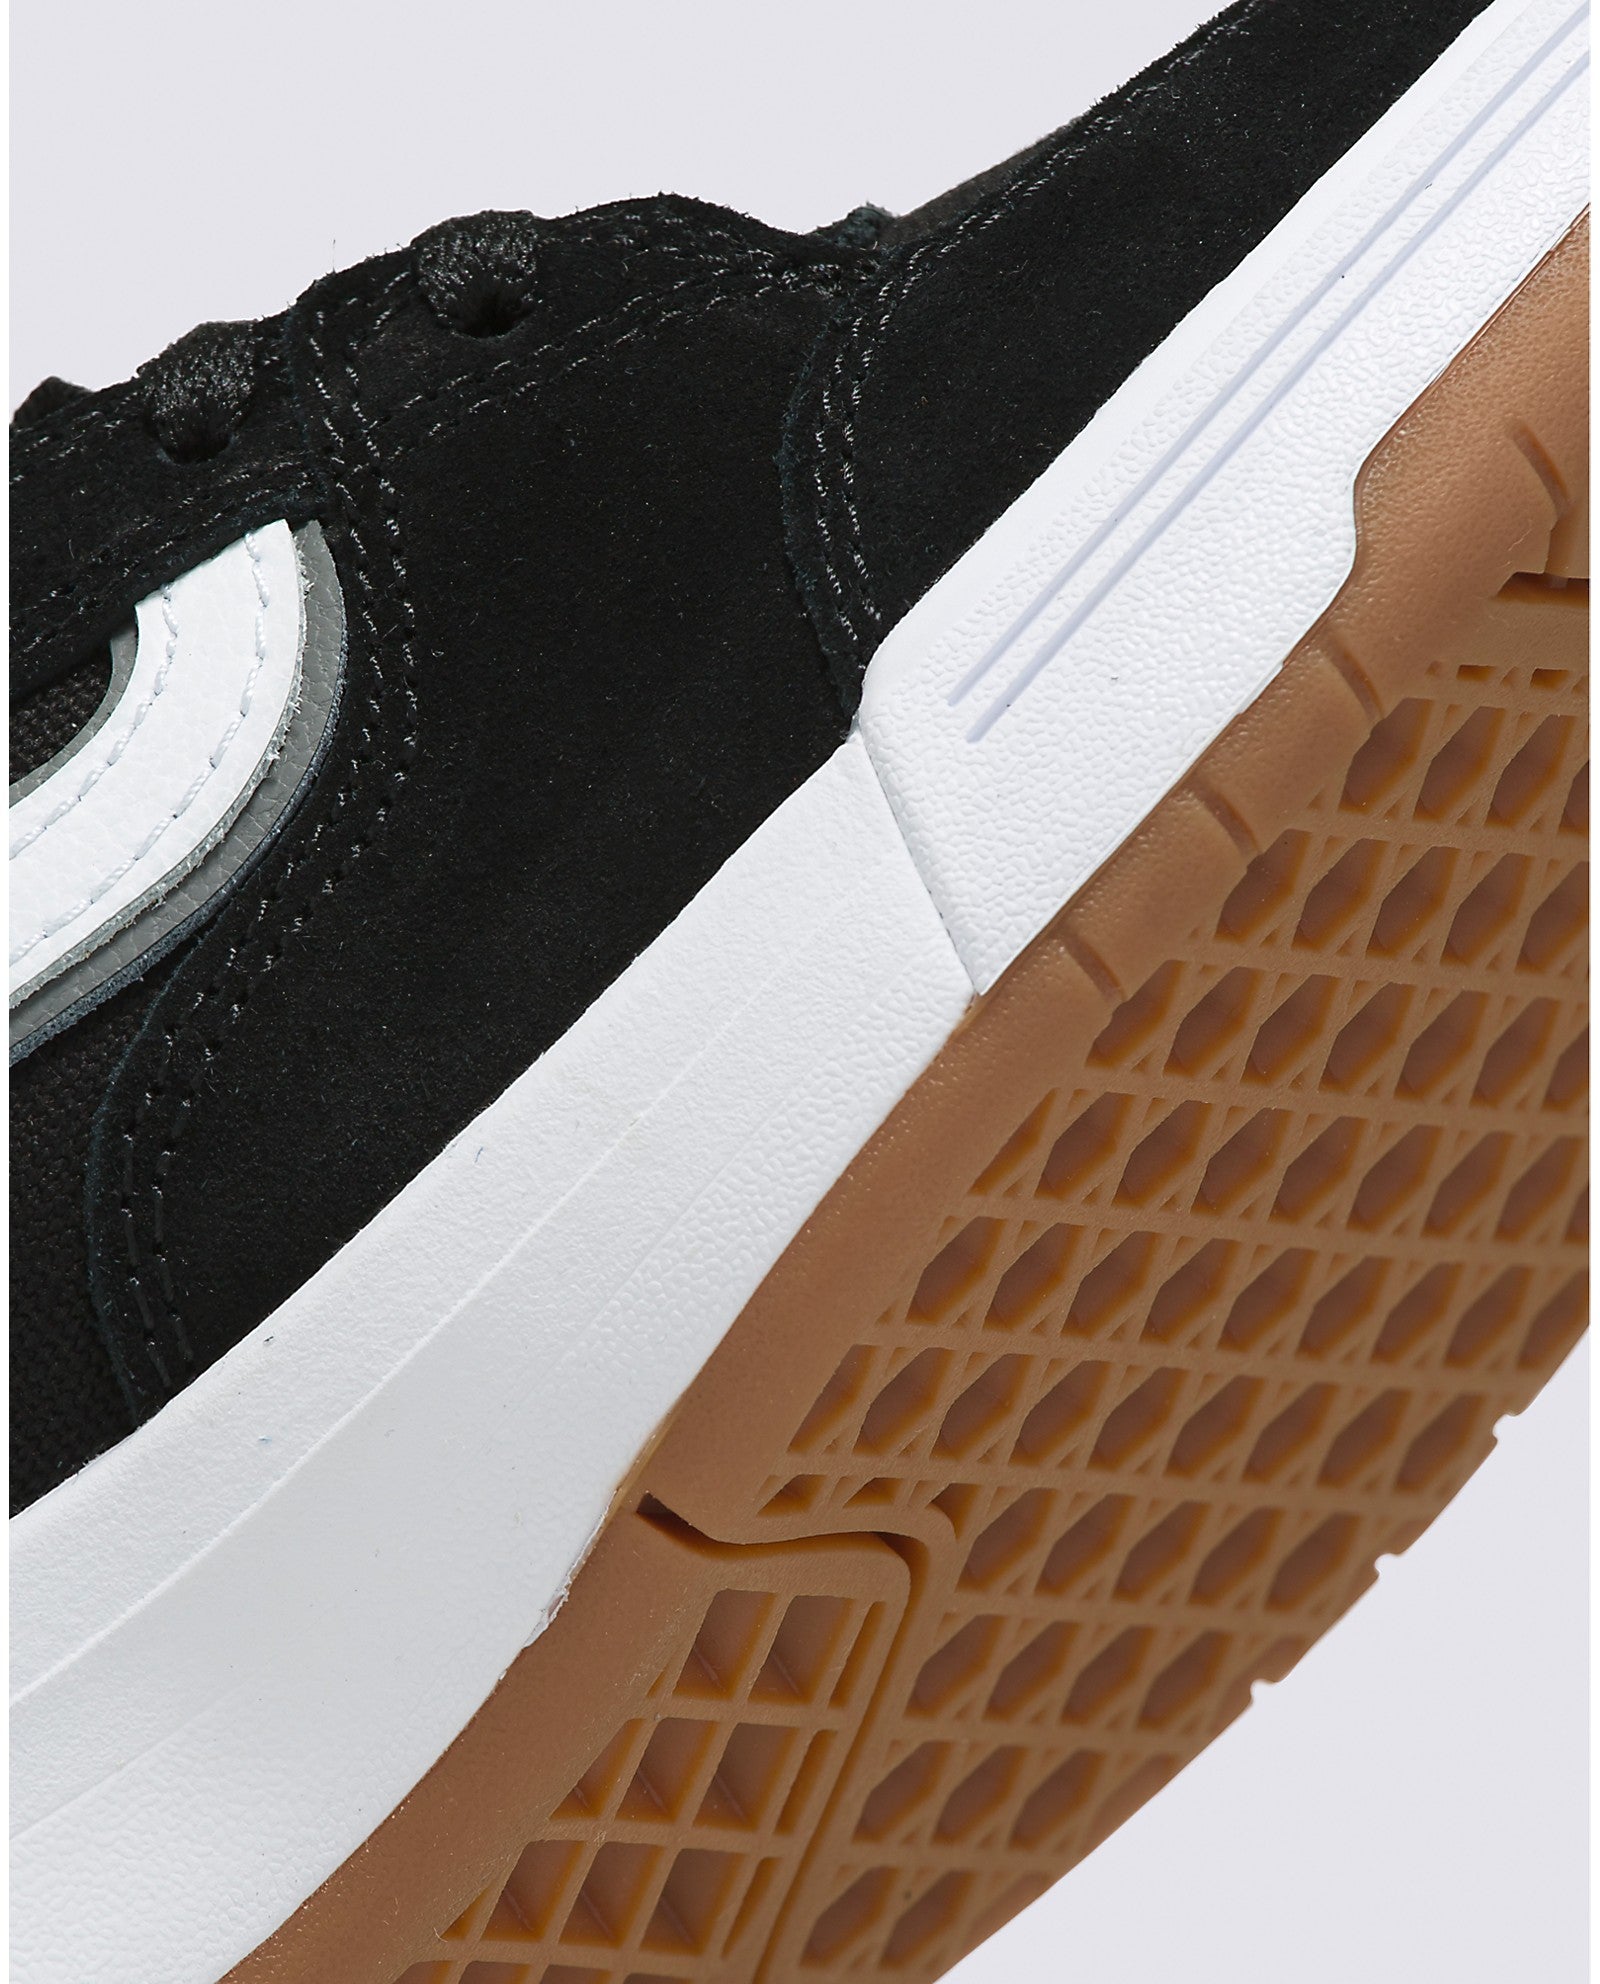 Black/White Zahba Mid Vans Skate Shoe Detail